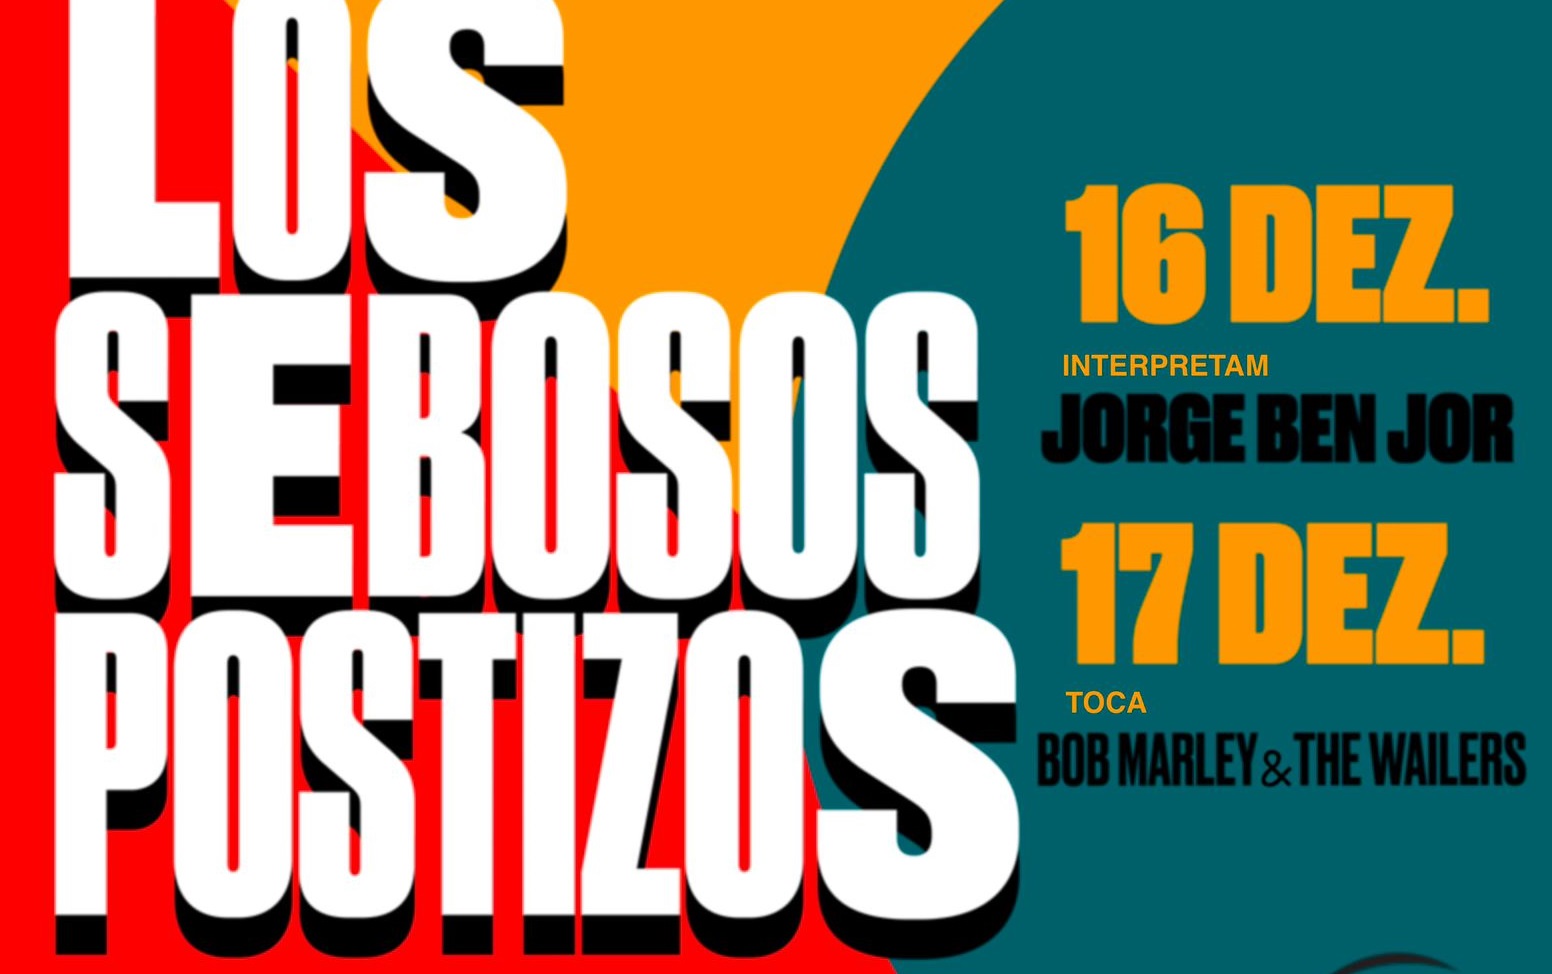 Pôster oficial do show de Los Sebosos Postizos